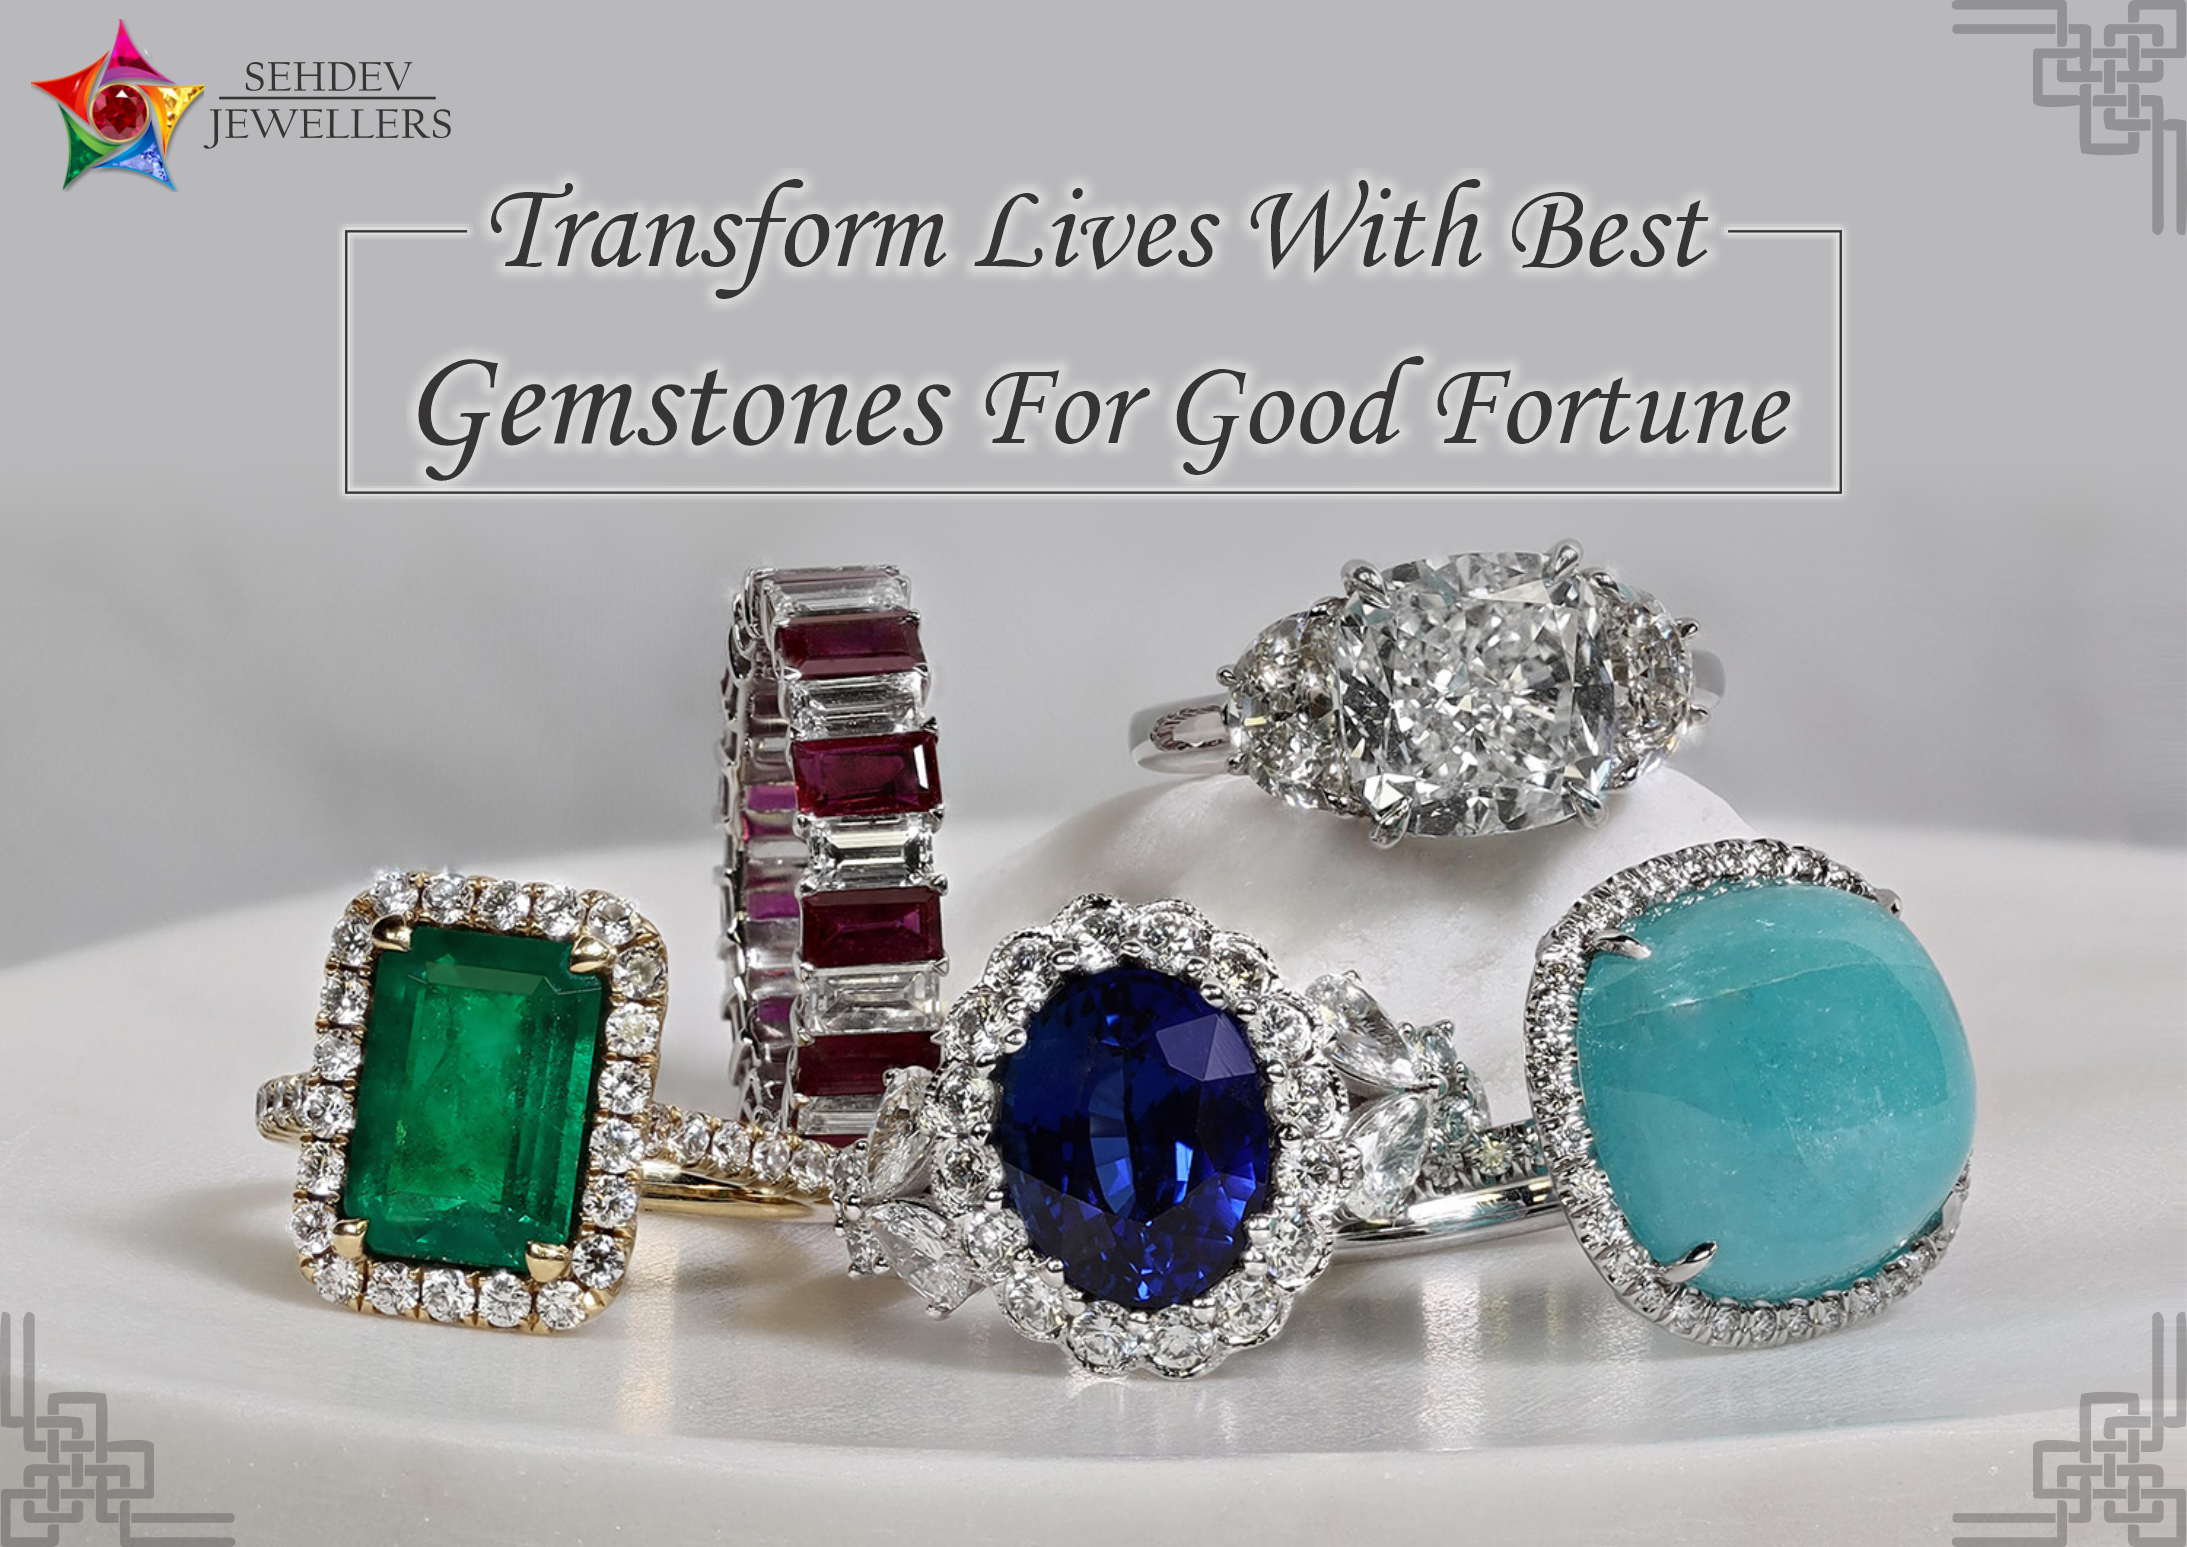 Transform Lives with Best Gem Stones for Good Fortune